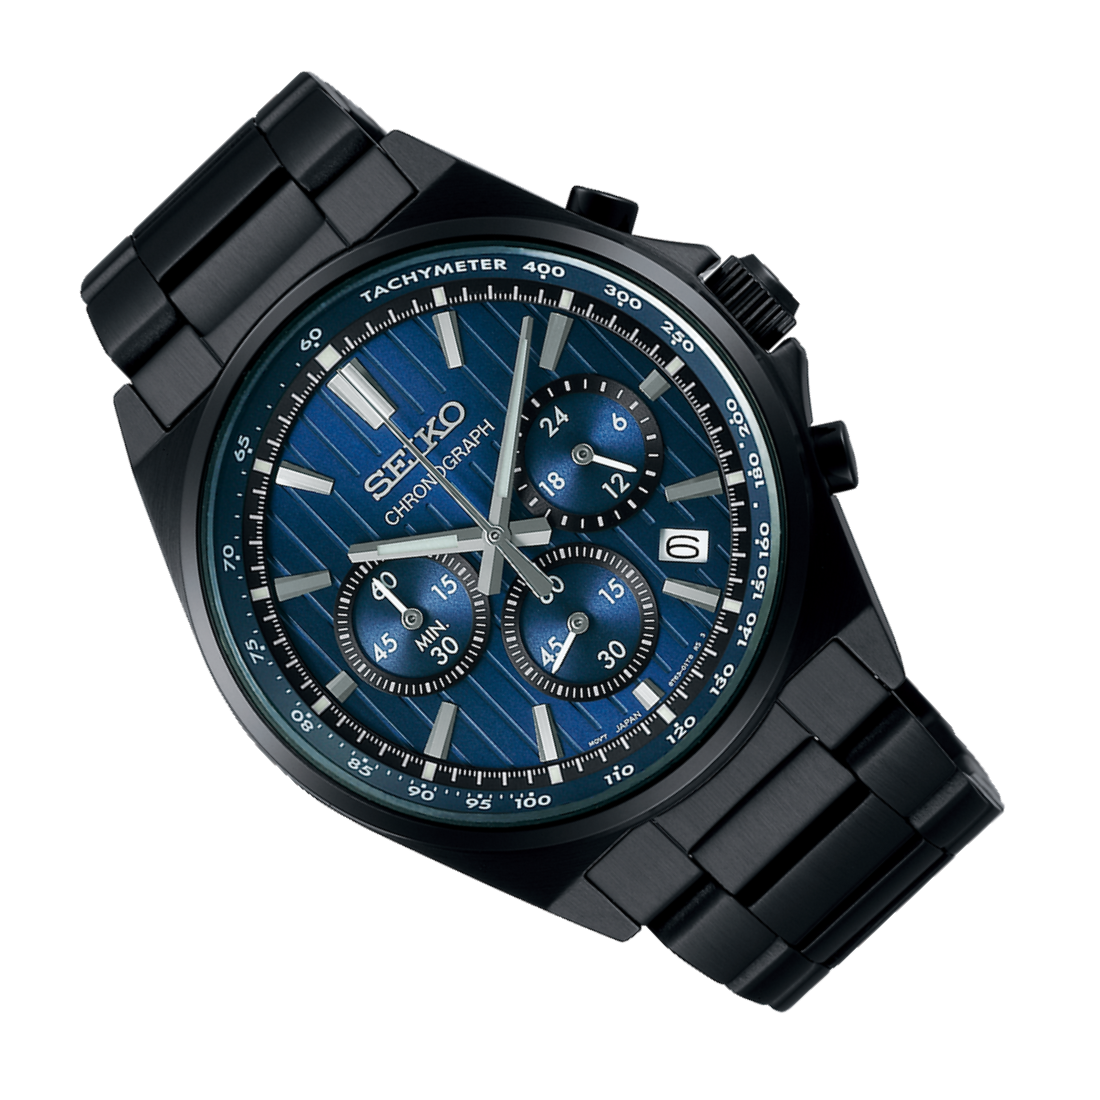 Seiko Selection S-Series SBTR035 SBTR035J Blue Dial Male Watch